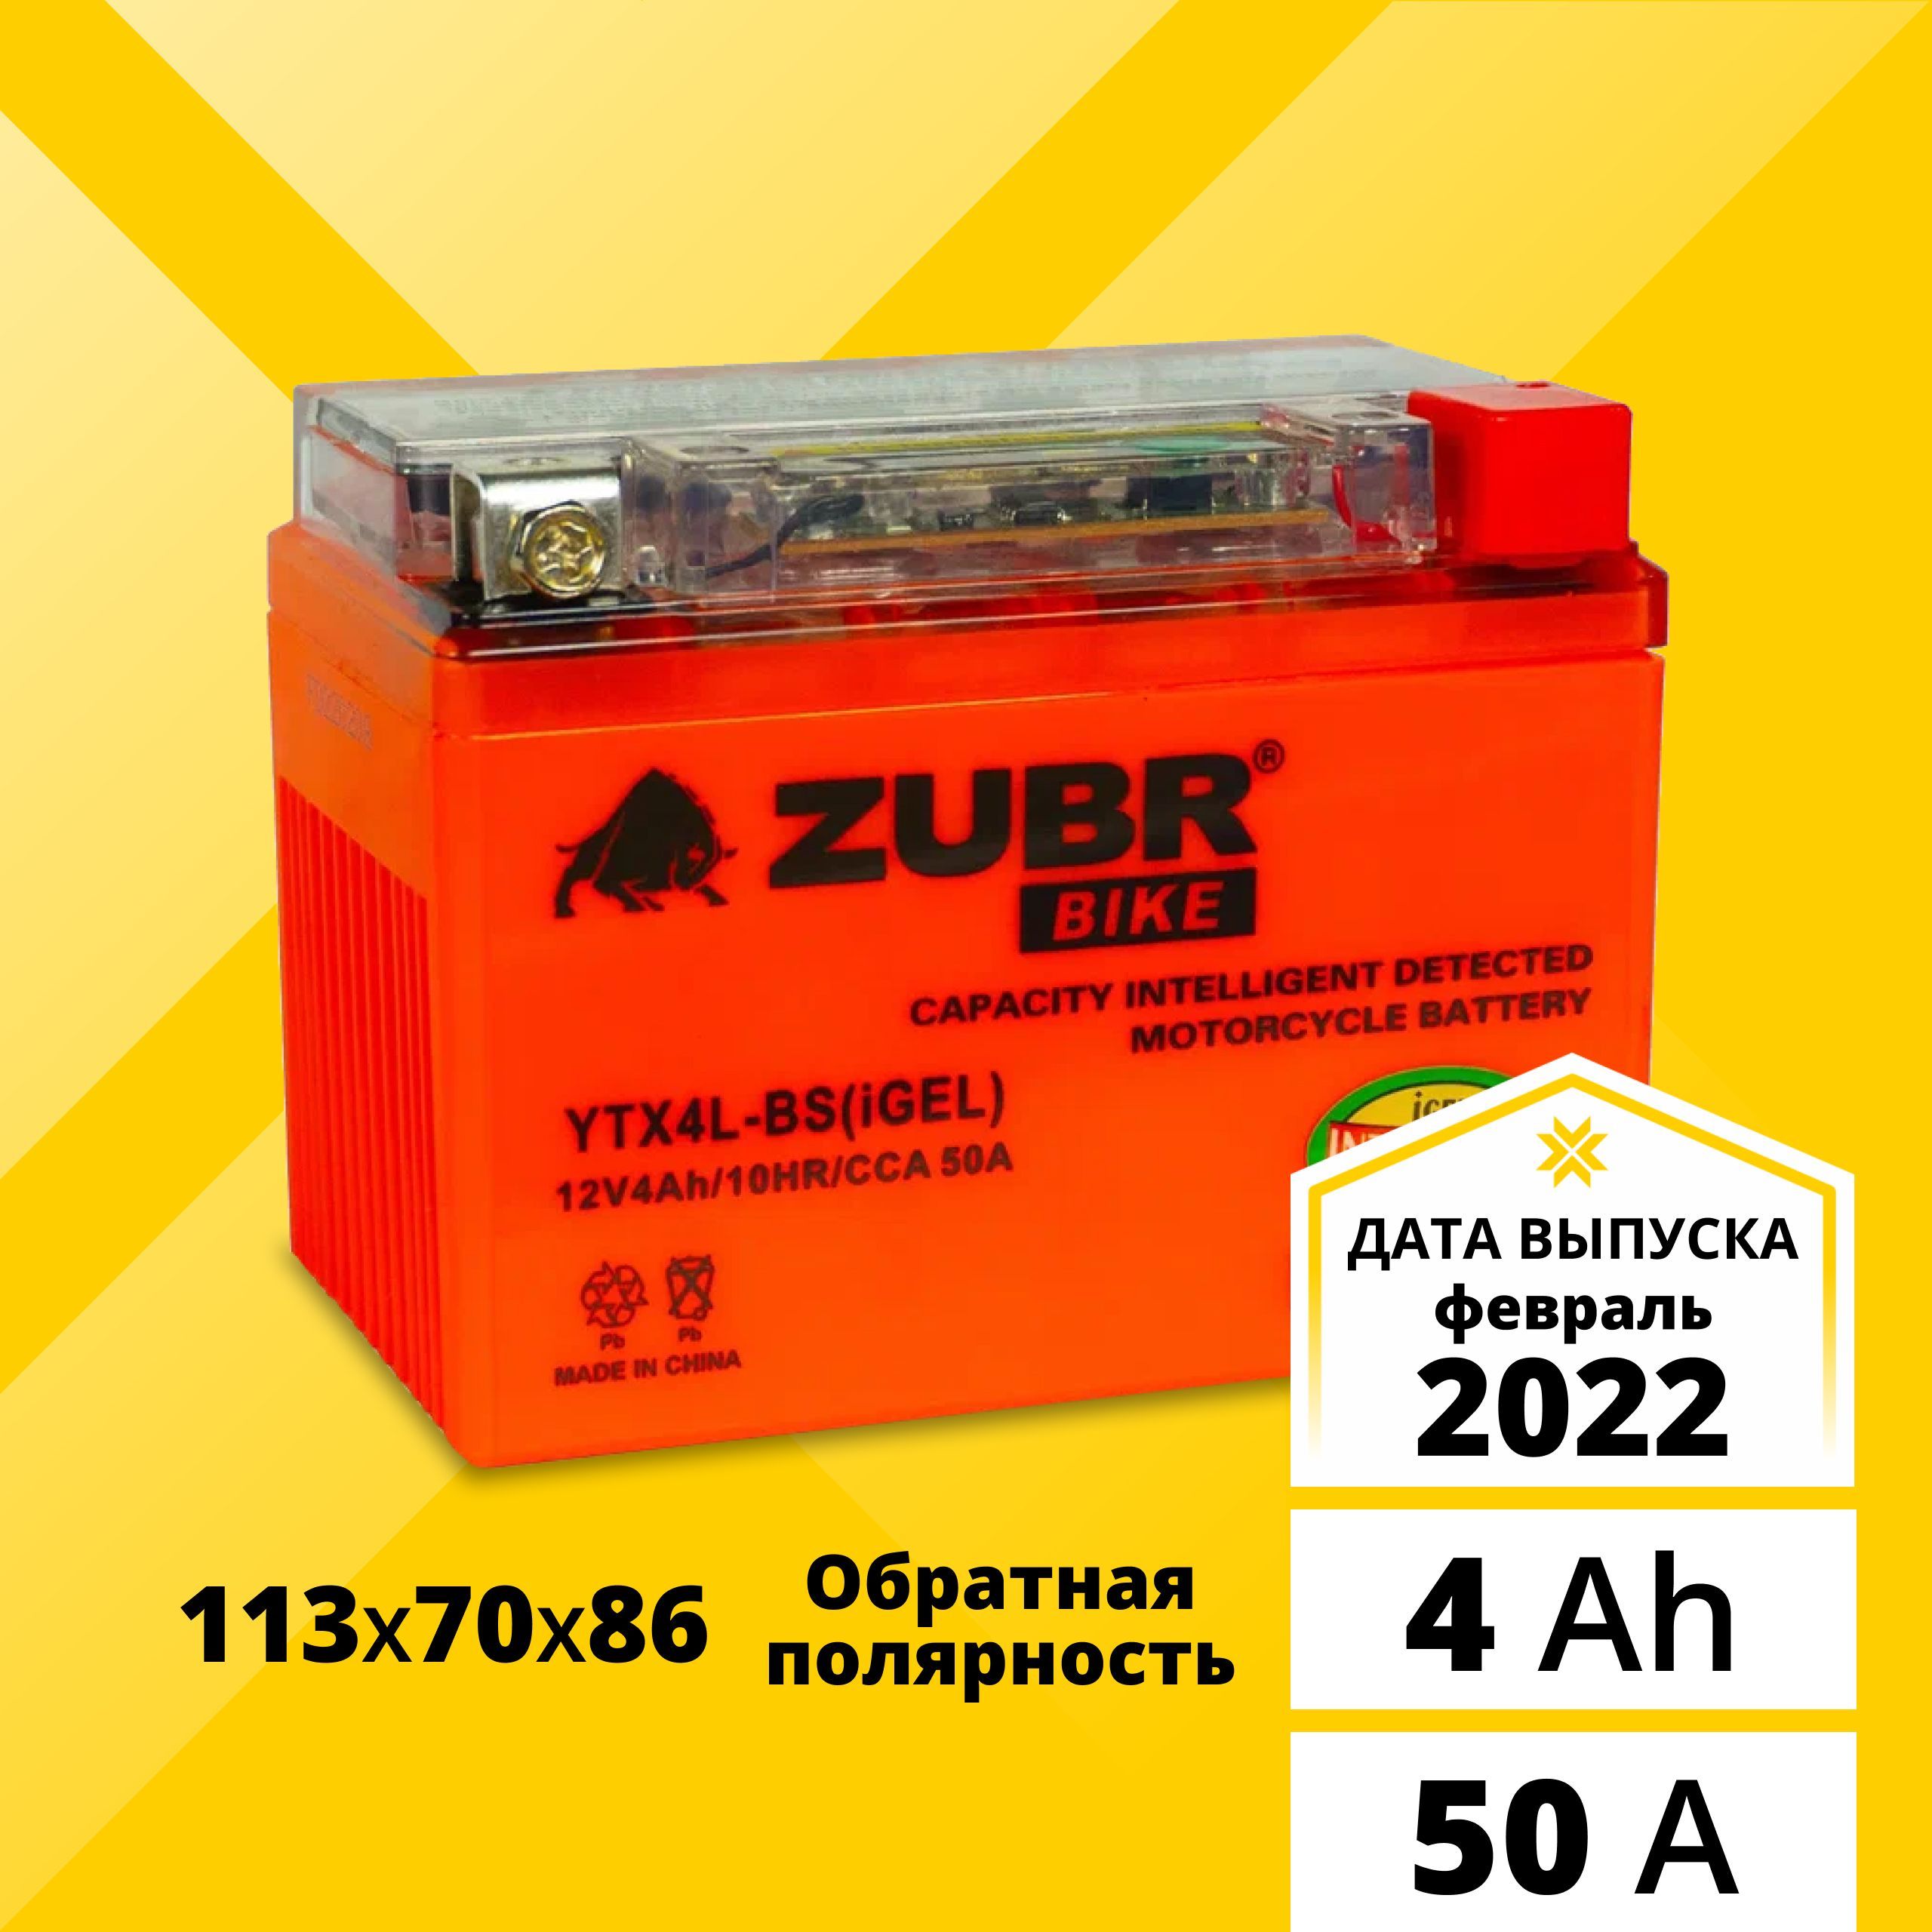 Аккумулятор для мотоцикла ZUBR YTX4L-BS (iGEL), гелевый, 4 Ah 50 A обратная полярность